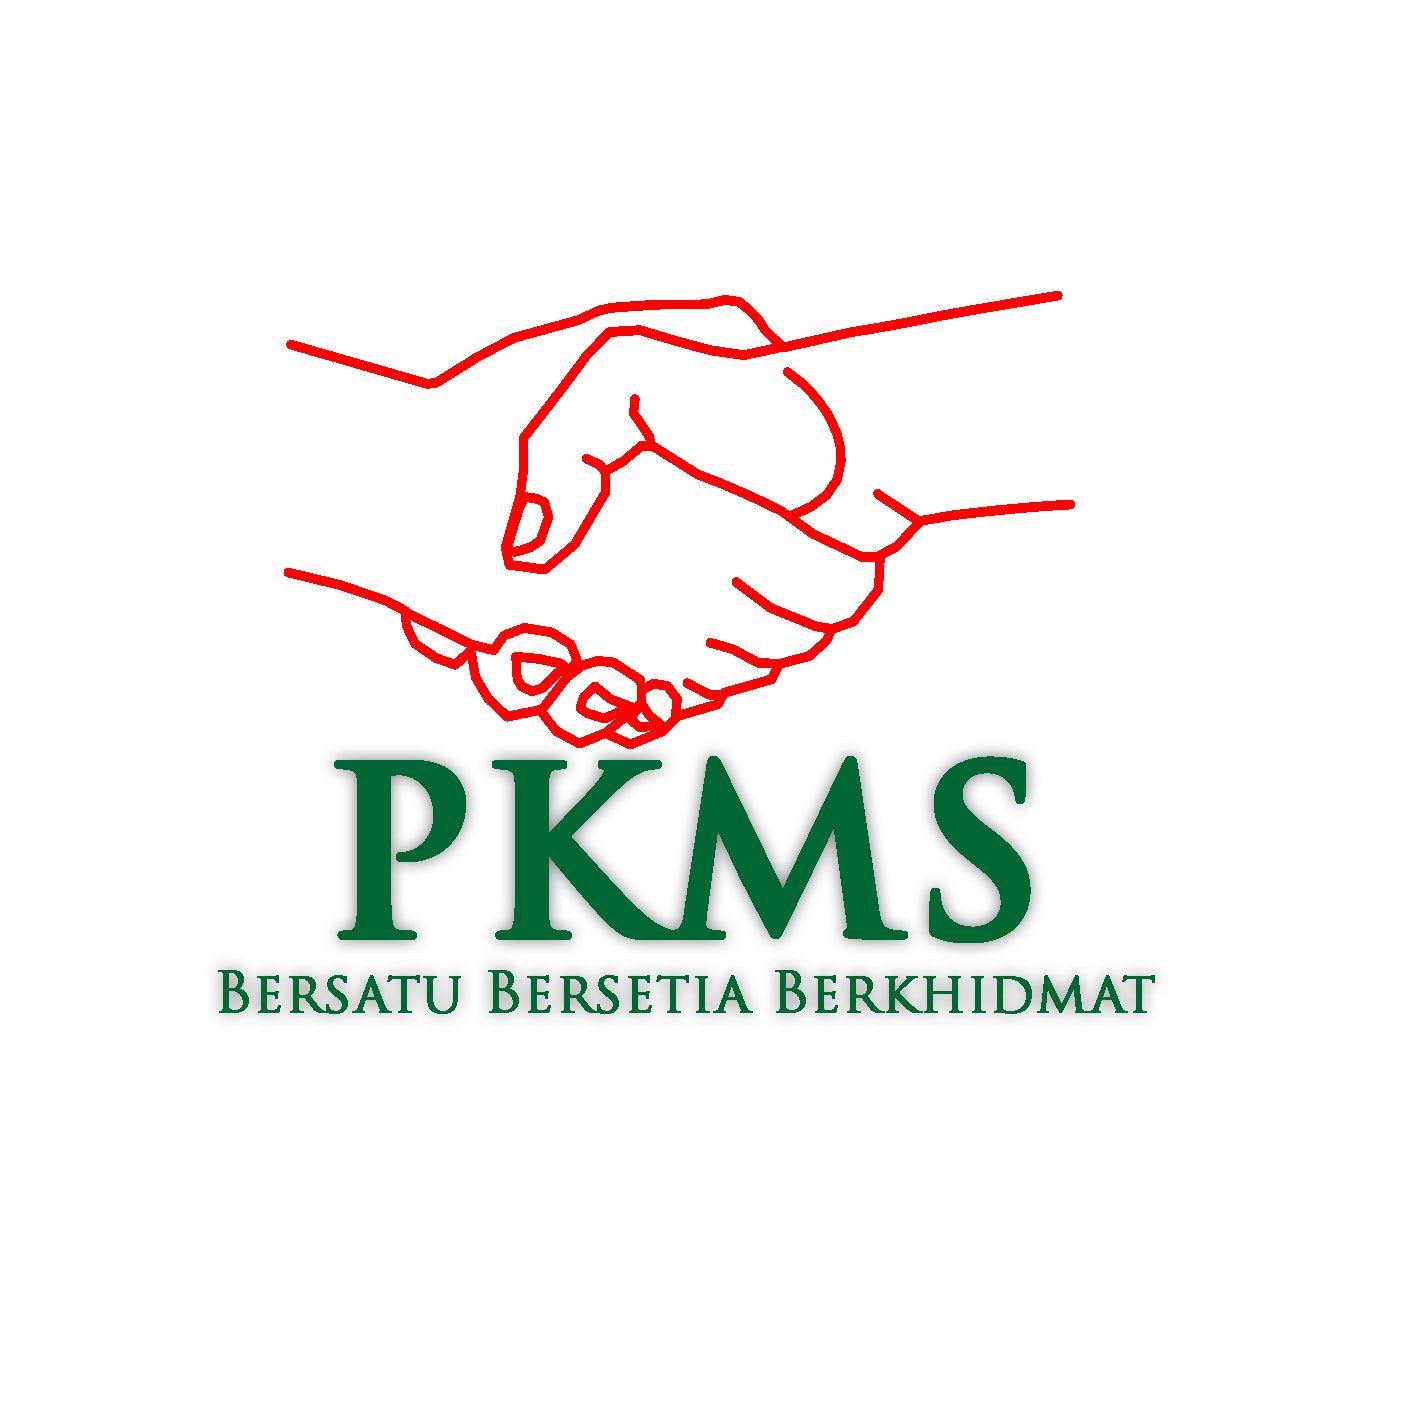 Pkms Logo - File:PKMS-Logo.jpg - Wikimedia Commons